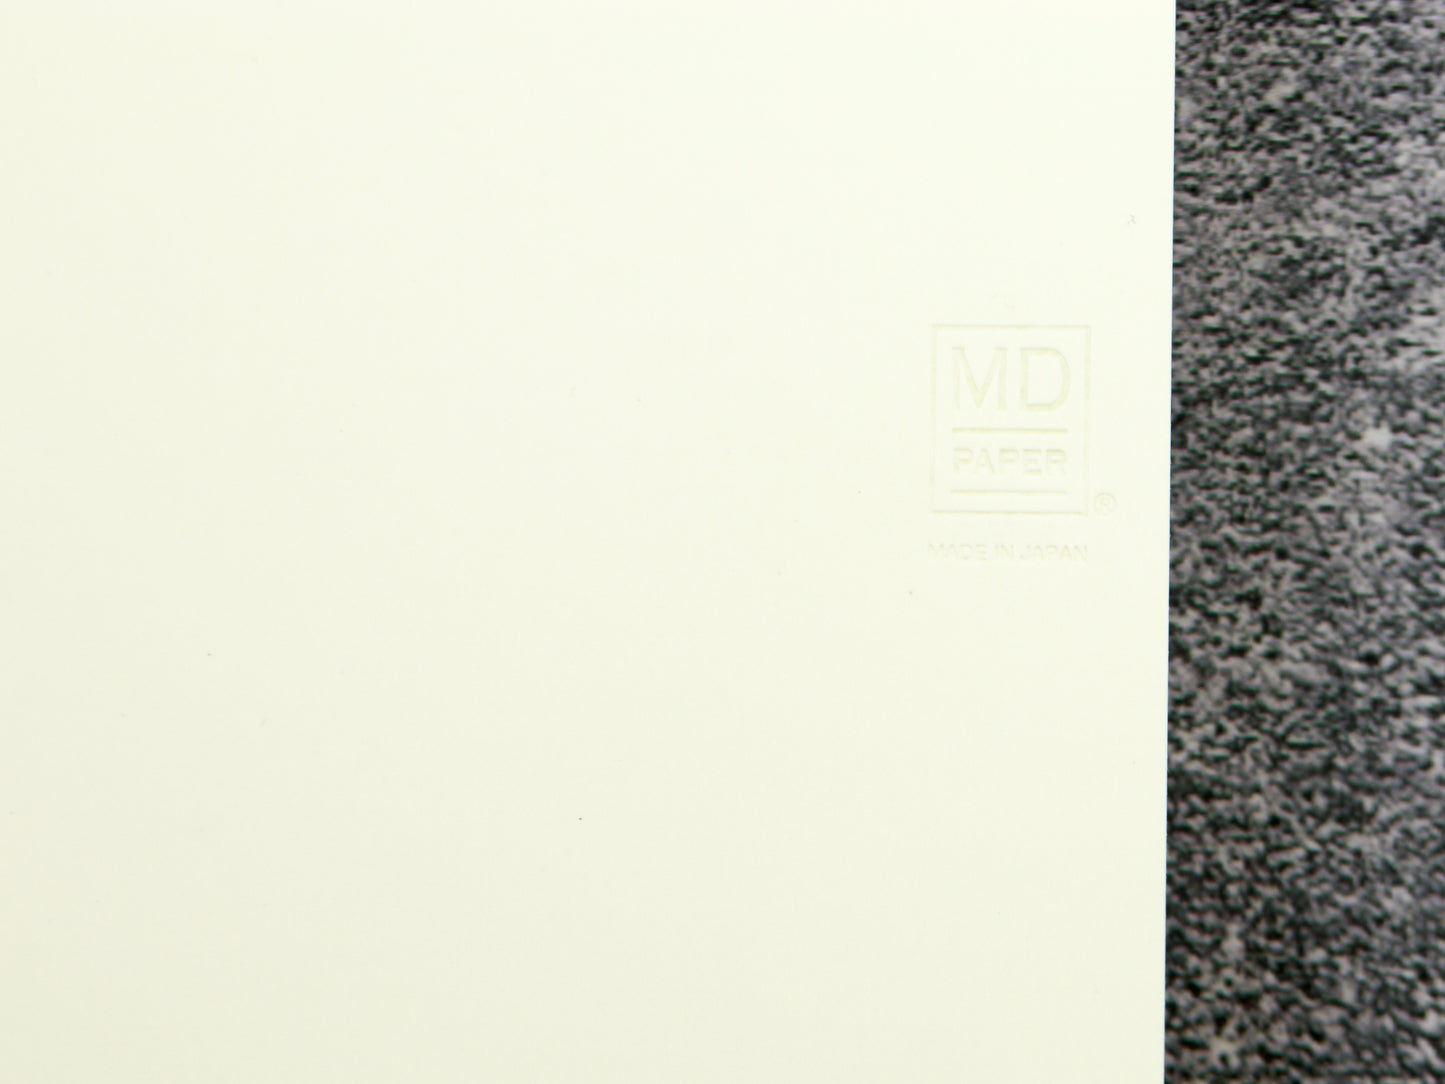 Midori MD Paper A5 Notebook Light (3 Pack)